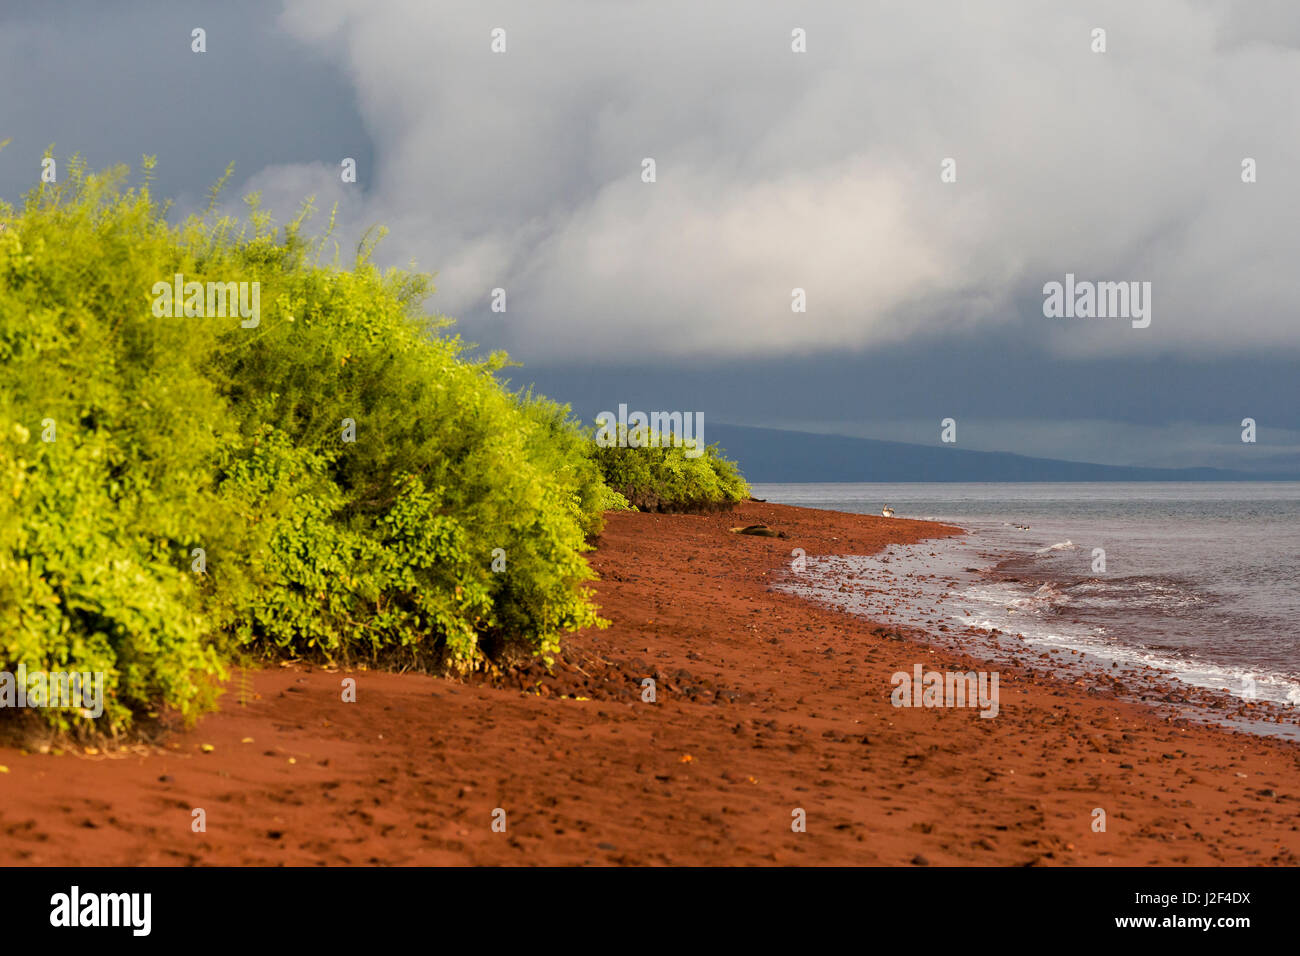 Ecuador, Galapagos Islands, Rabida, Red Beach, saltbrush, (Cryptocarpus pyriformis). View of the red beach sand and saltbrush. Stock Photo